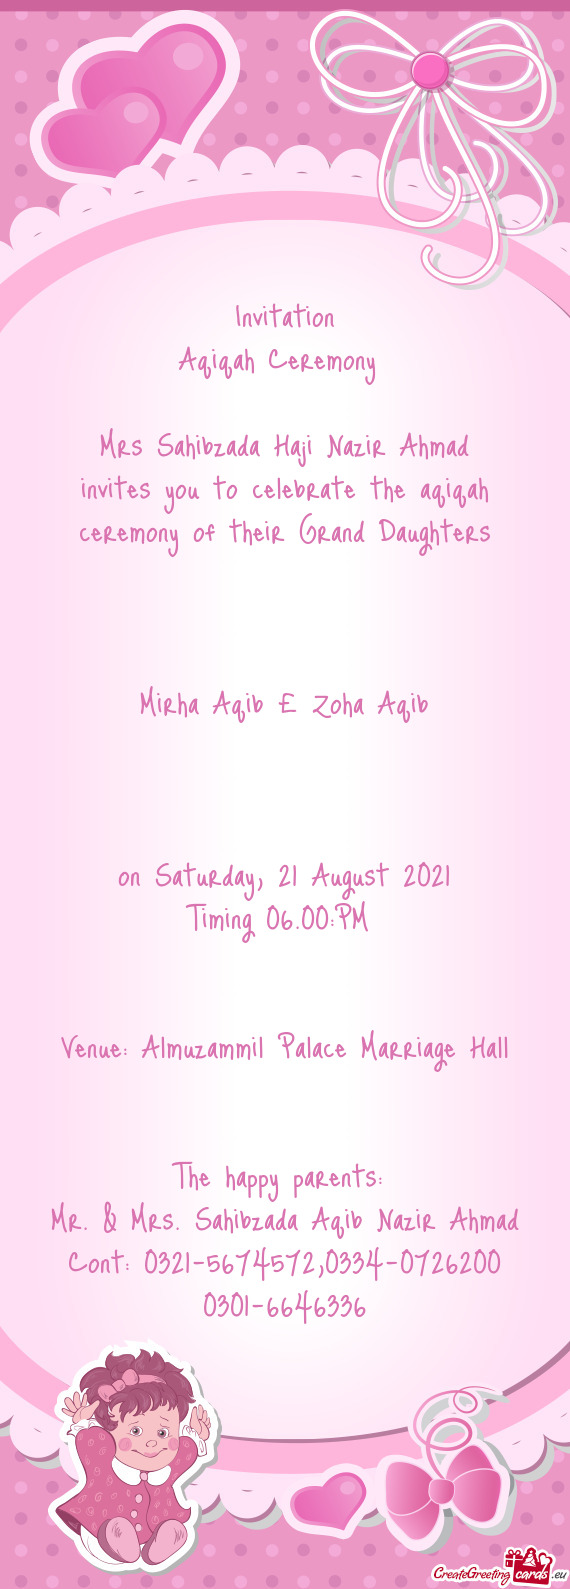 Ceremony of their Grand Daughters
 
 
 
 Mirha Aqib £ Zoha Aqib
 
 
 
 on Saturday